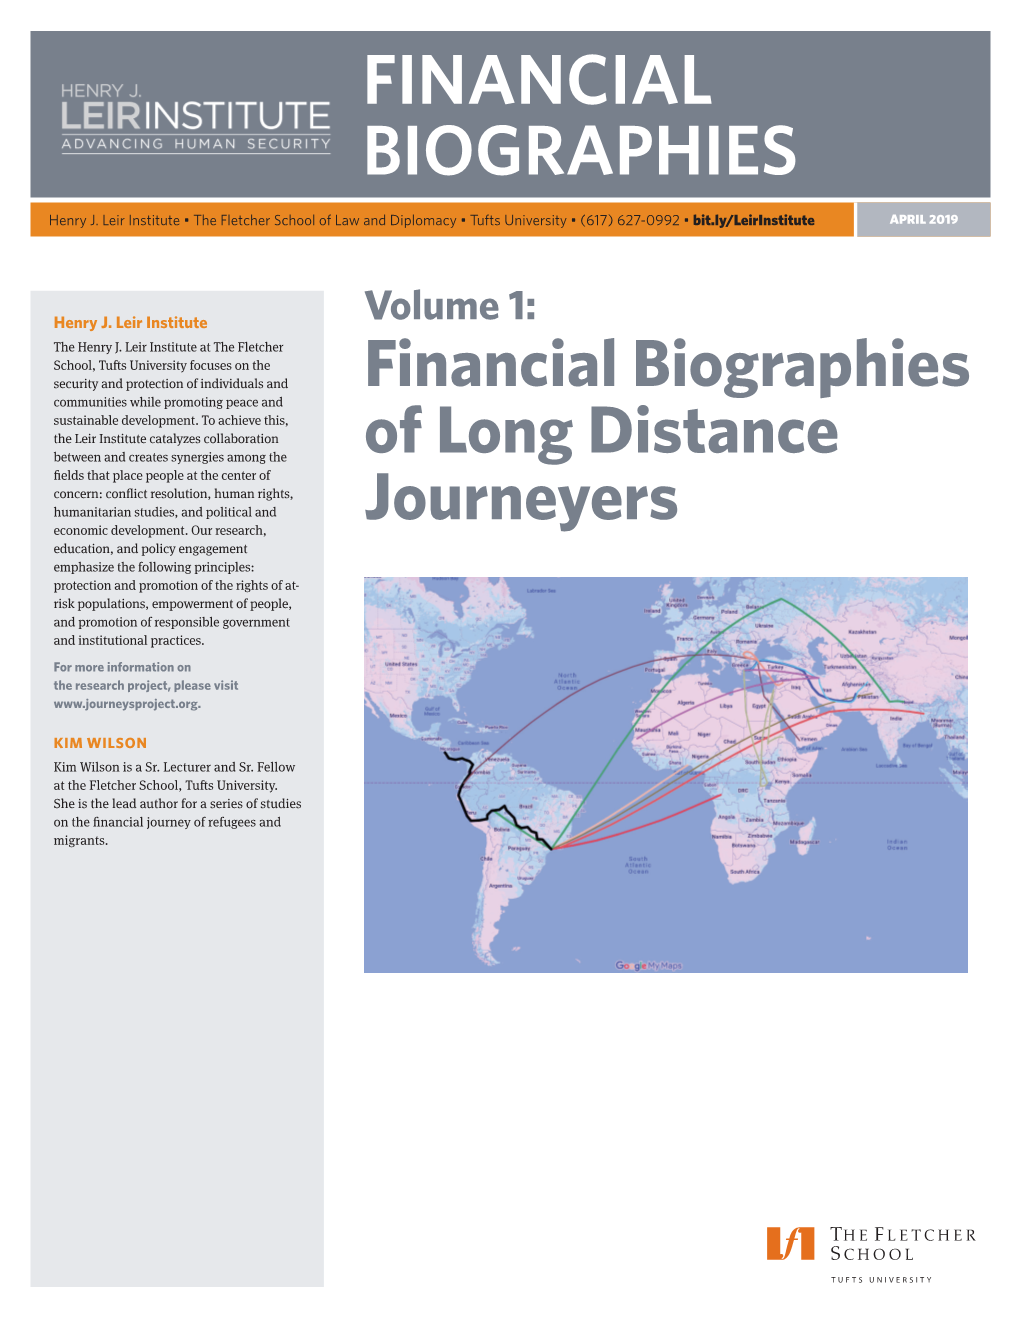 Financial Biographies